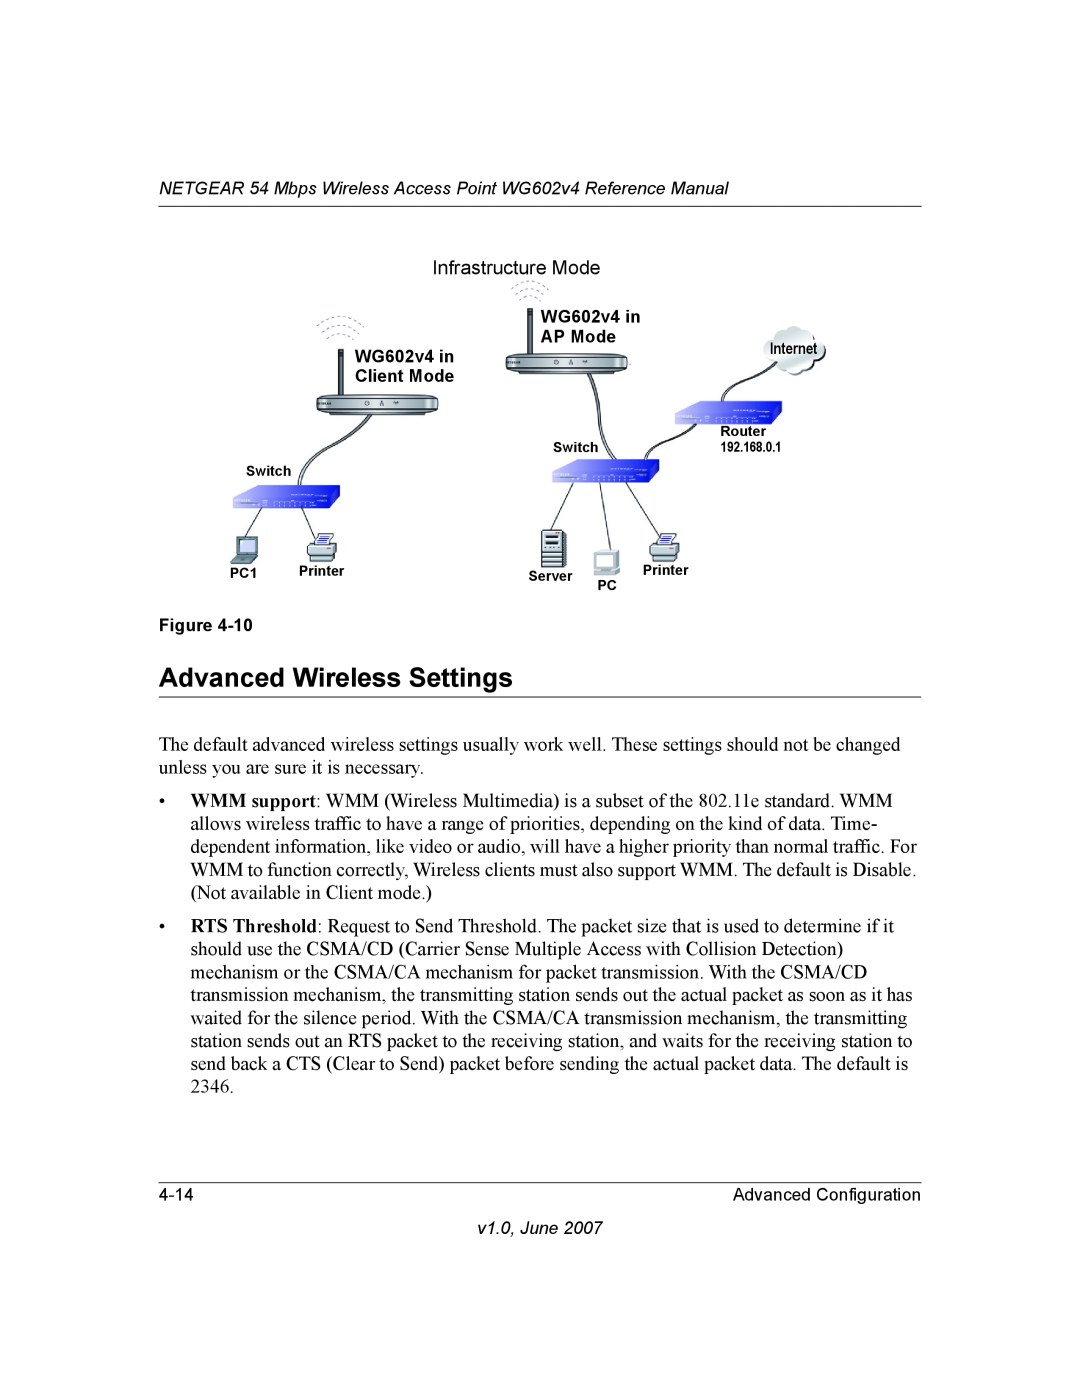 NETGEAR WG602V4 manual Advanced Wireless Settings, Infrastructure Mode 